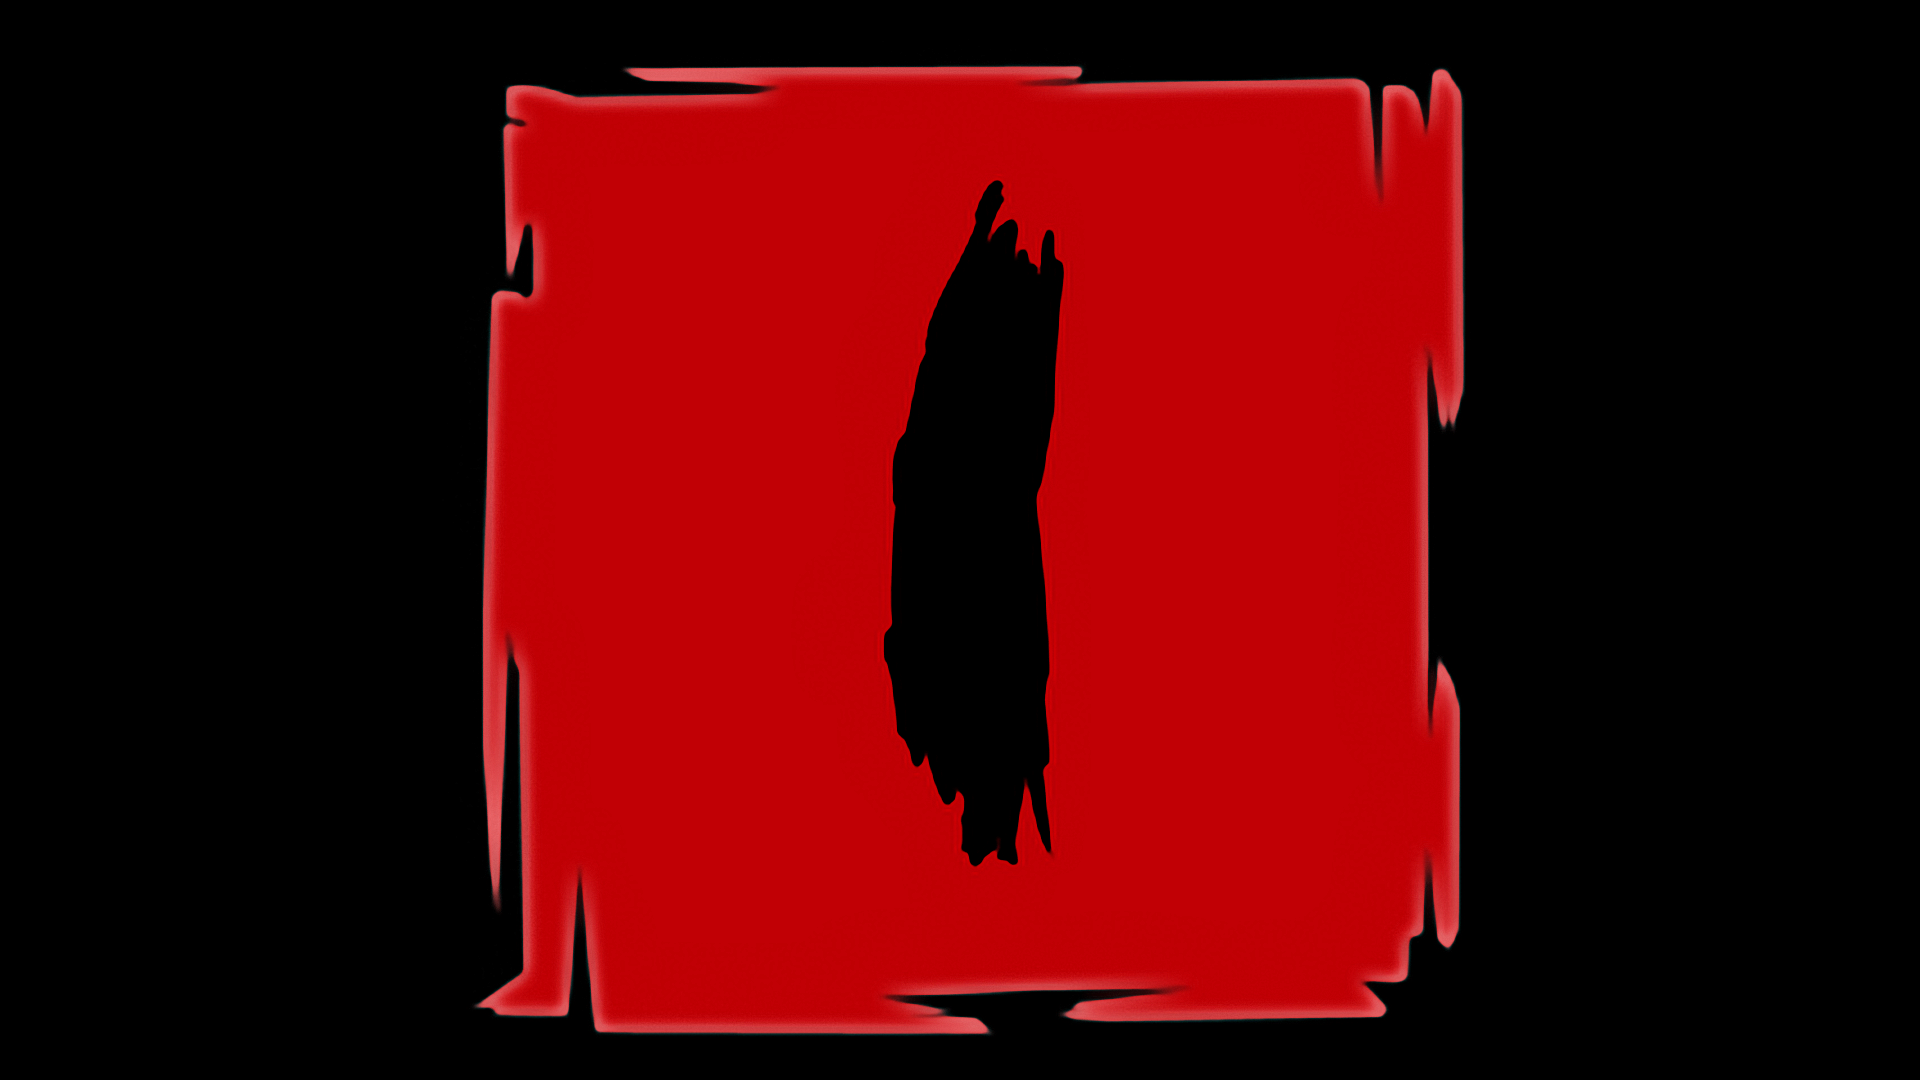 Icon for Aragami